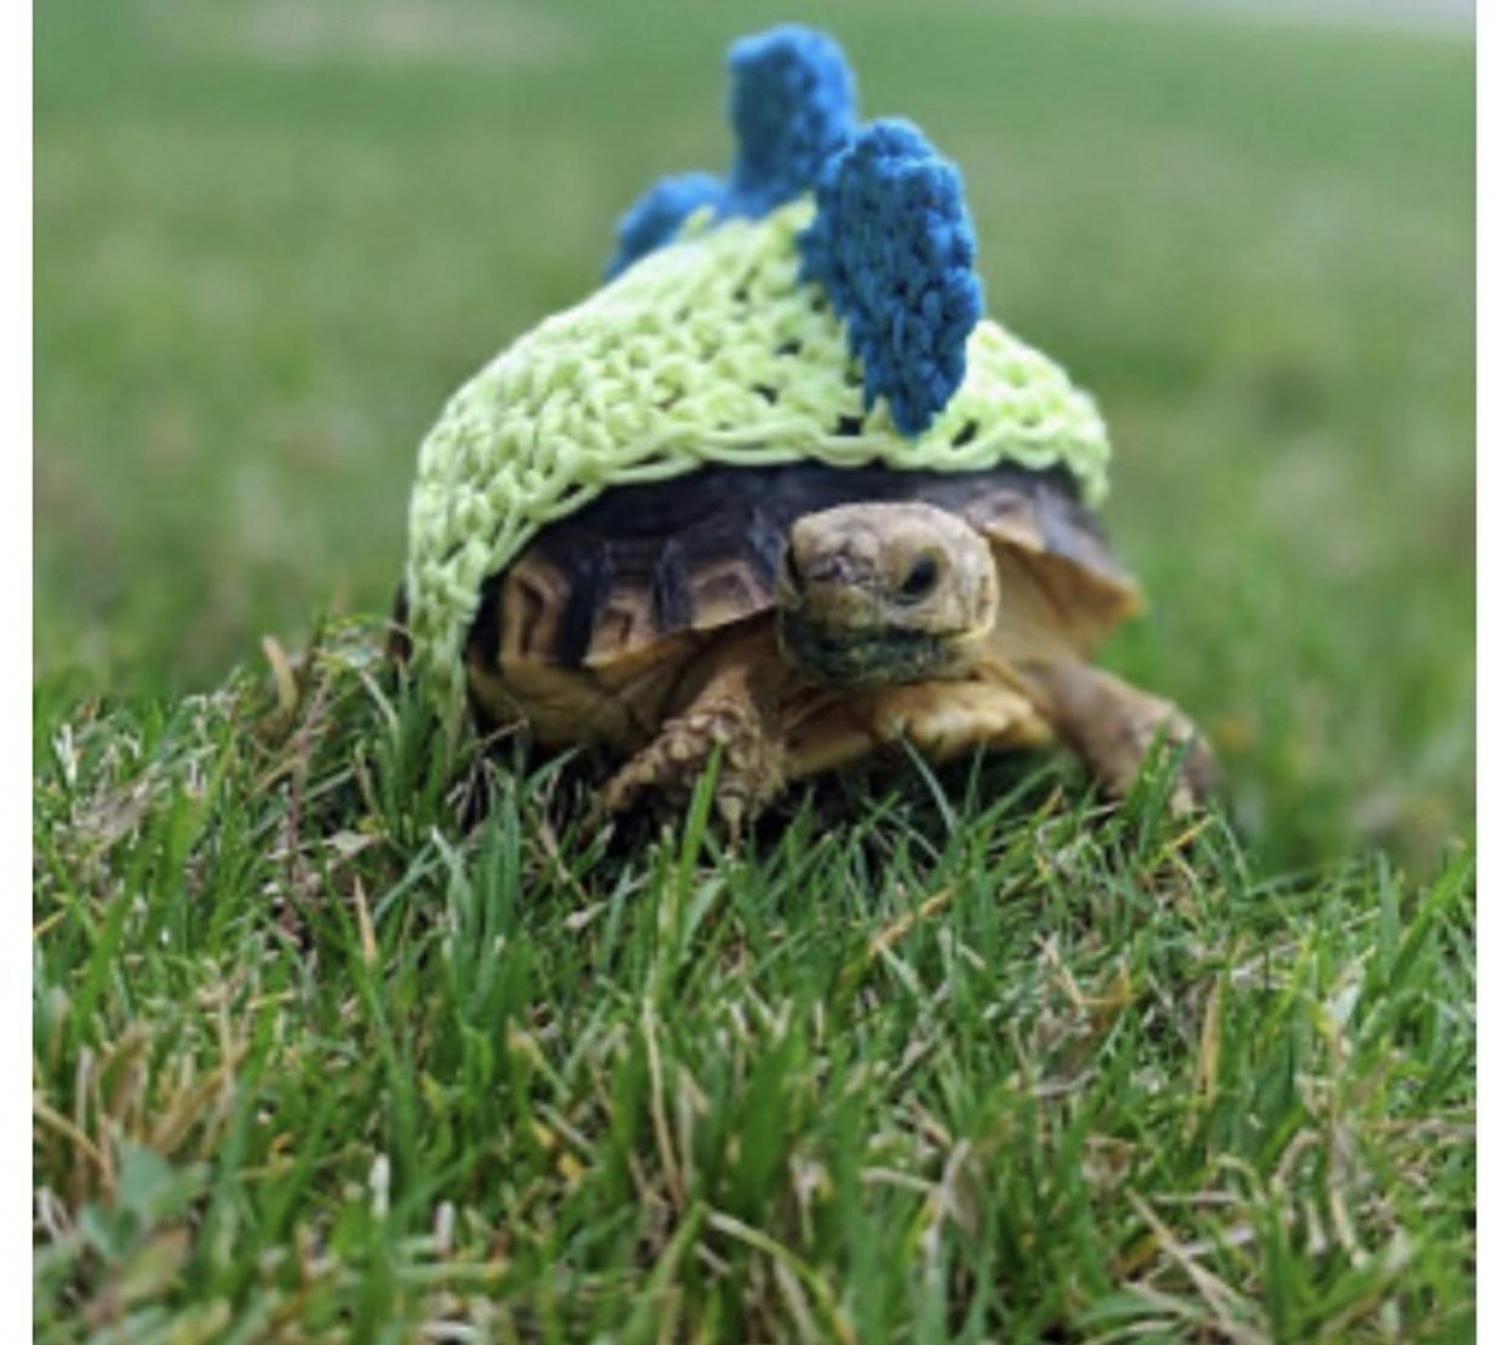 Crochet Turtle Sweater - Stegosaurus Dinosaur tortoise cozy